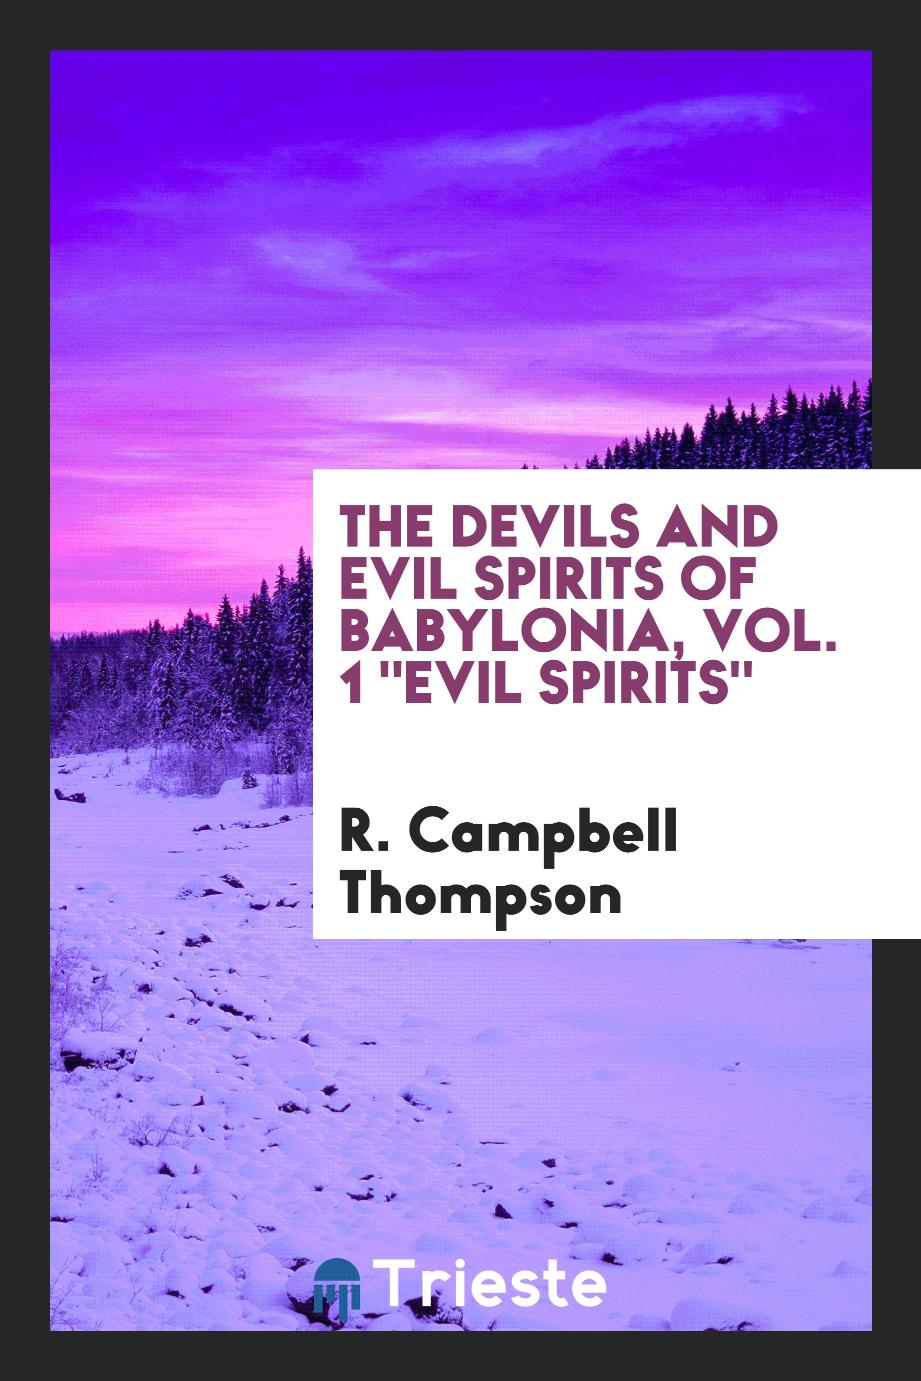 R. Campbell Thompson - The devils and evil spirits of Babylonia, Vol. 1 "Evil Spirits"